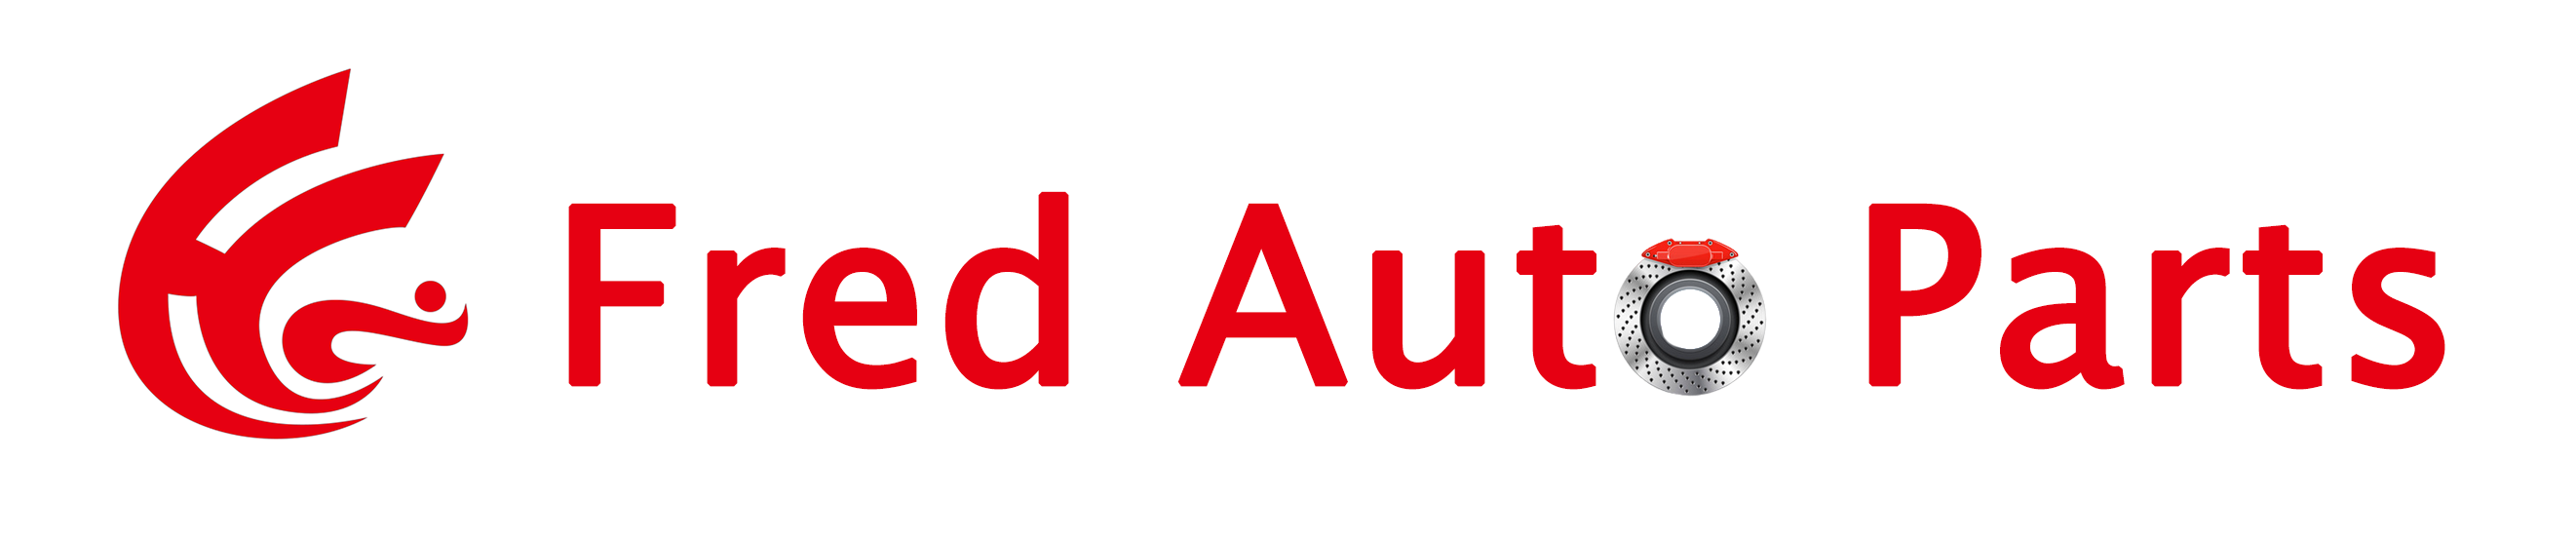 Fred Auto Parts logo